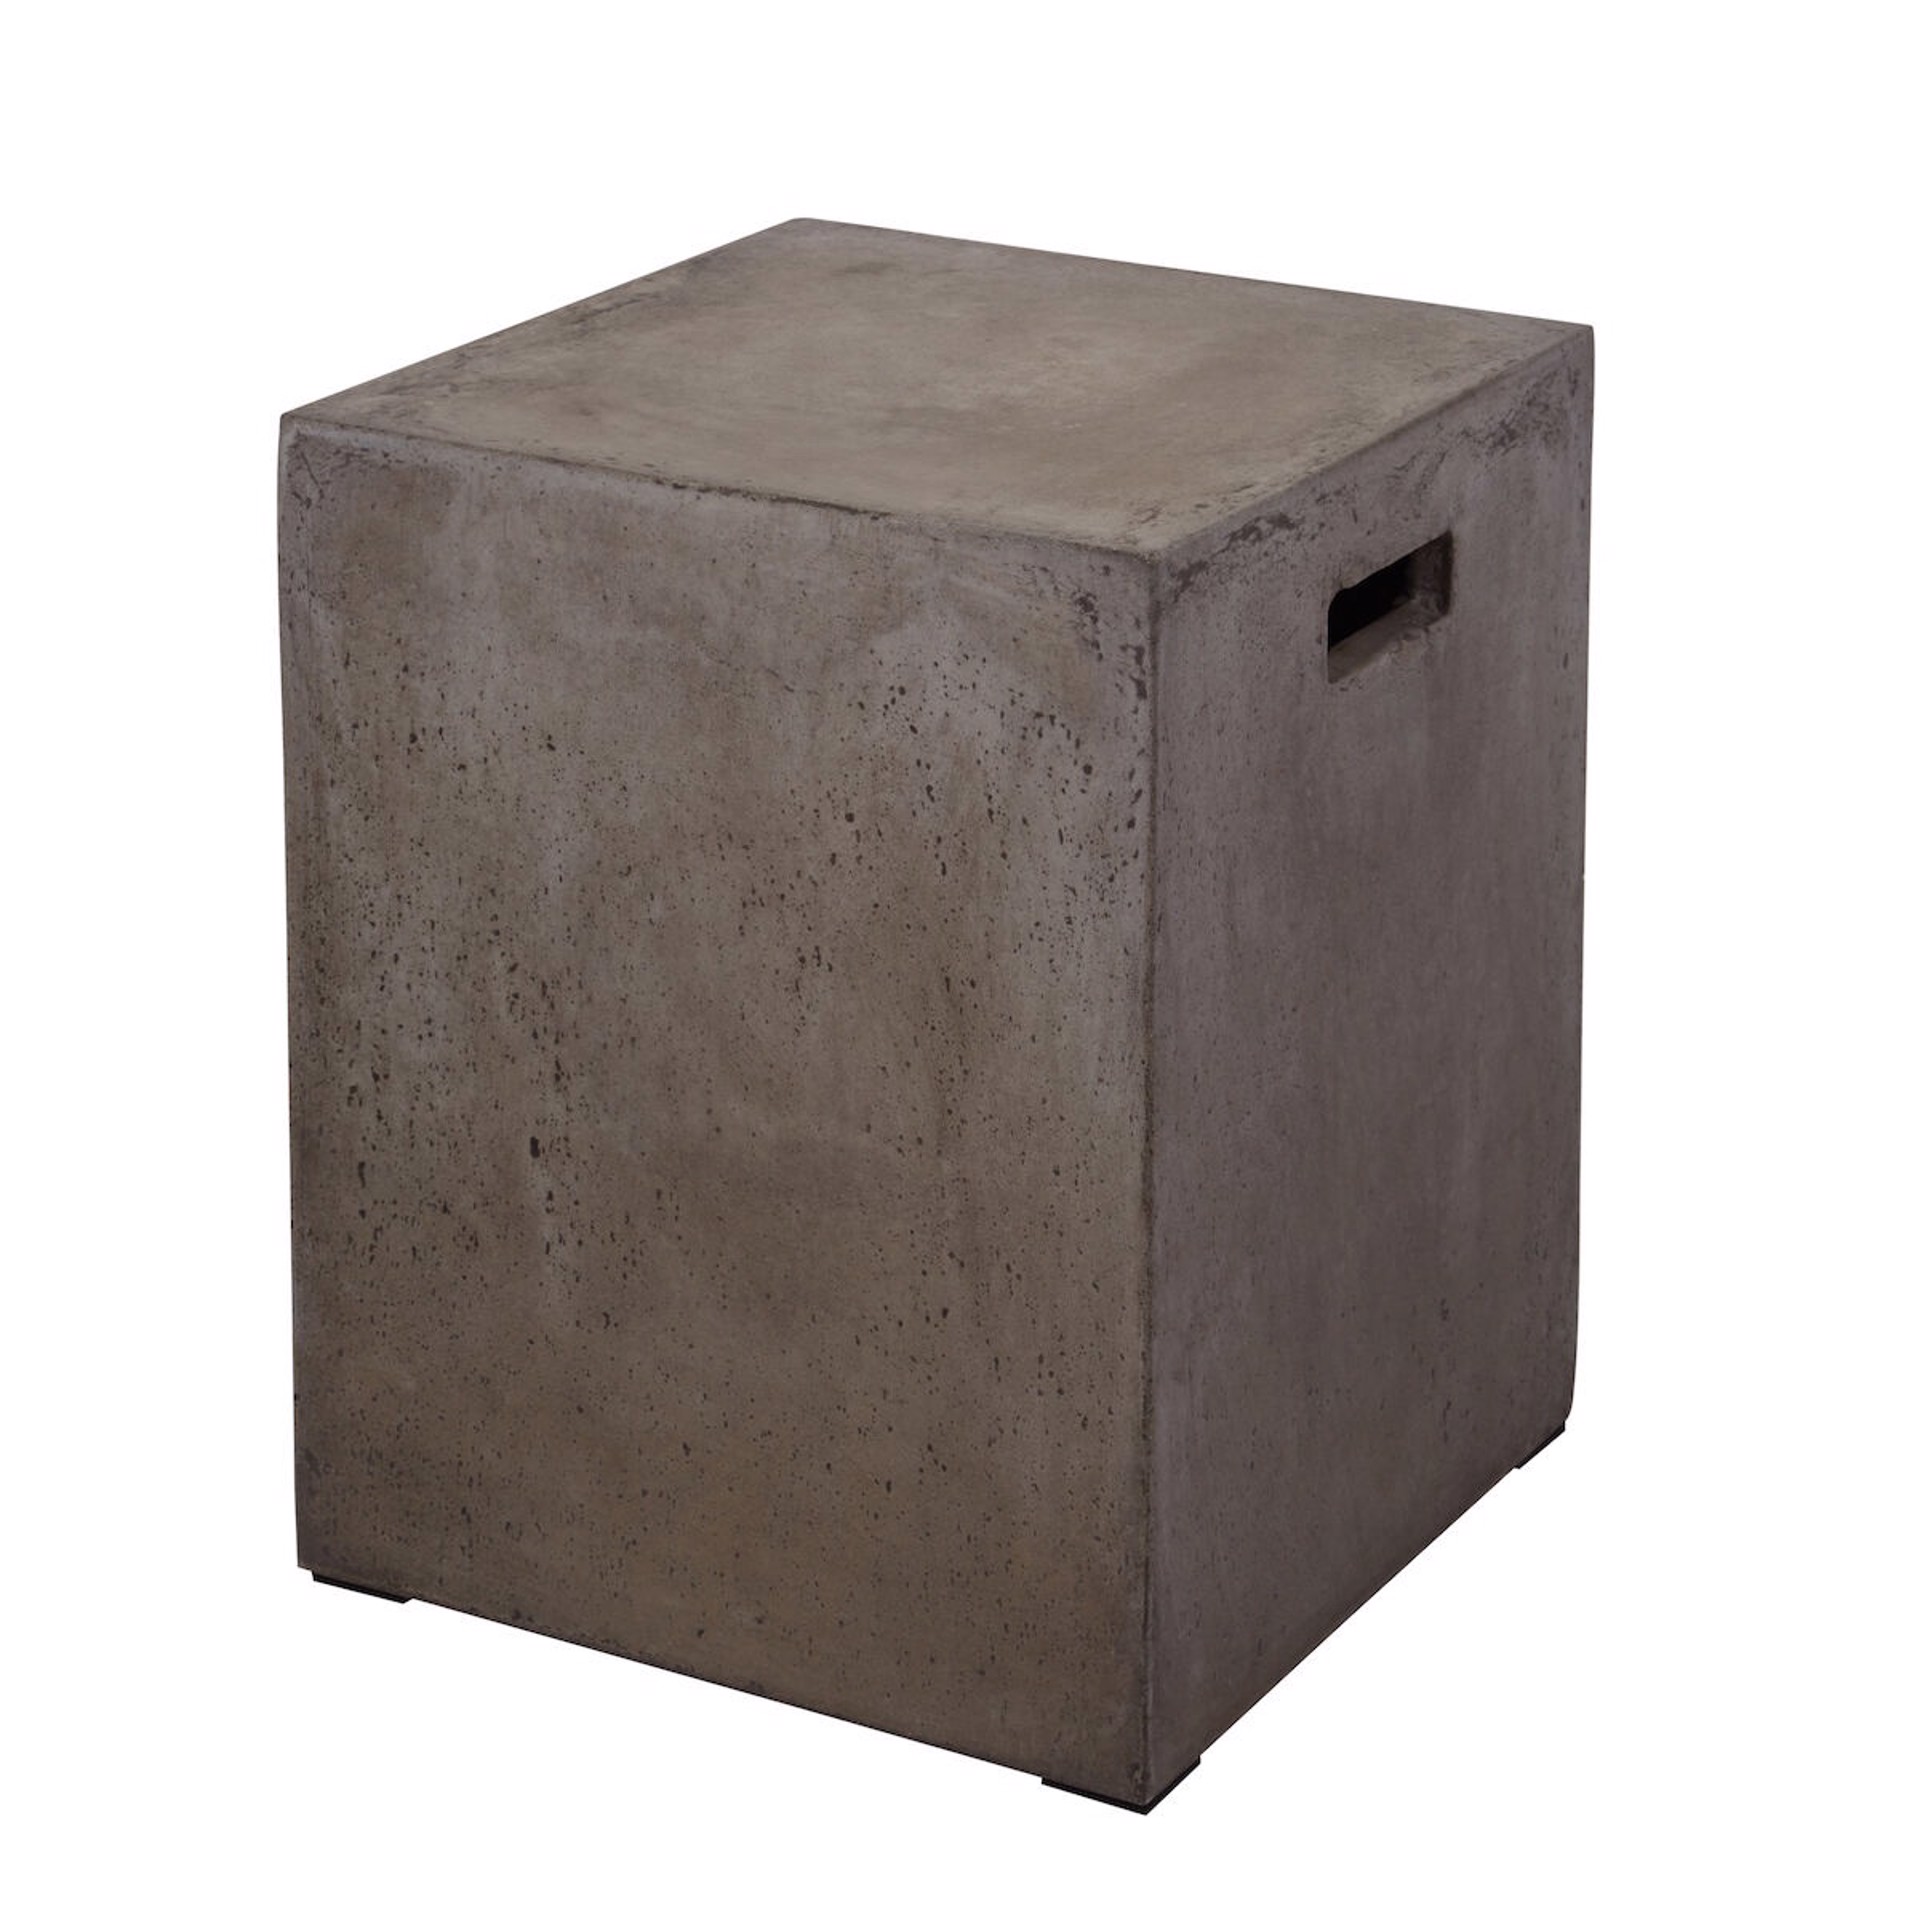 Concrete Pedestal - Small by Indigo Desert Ranch - Furniture